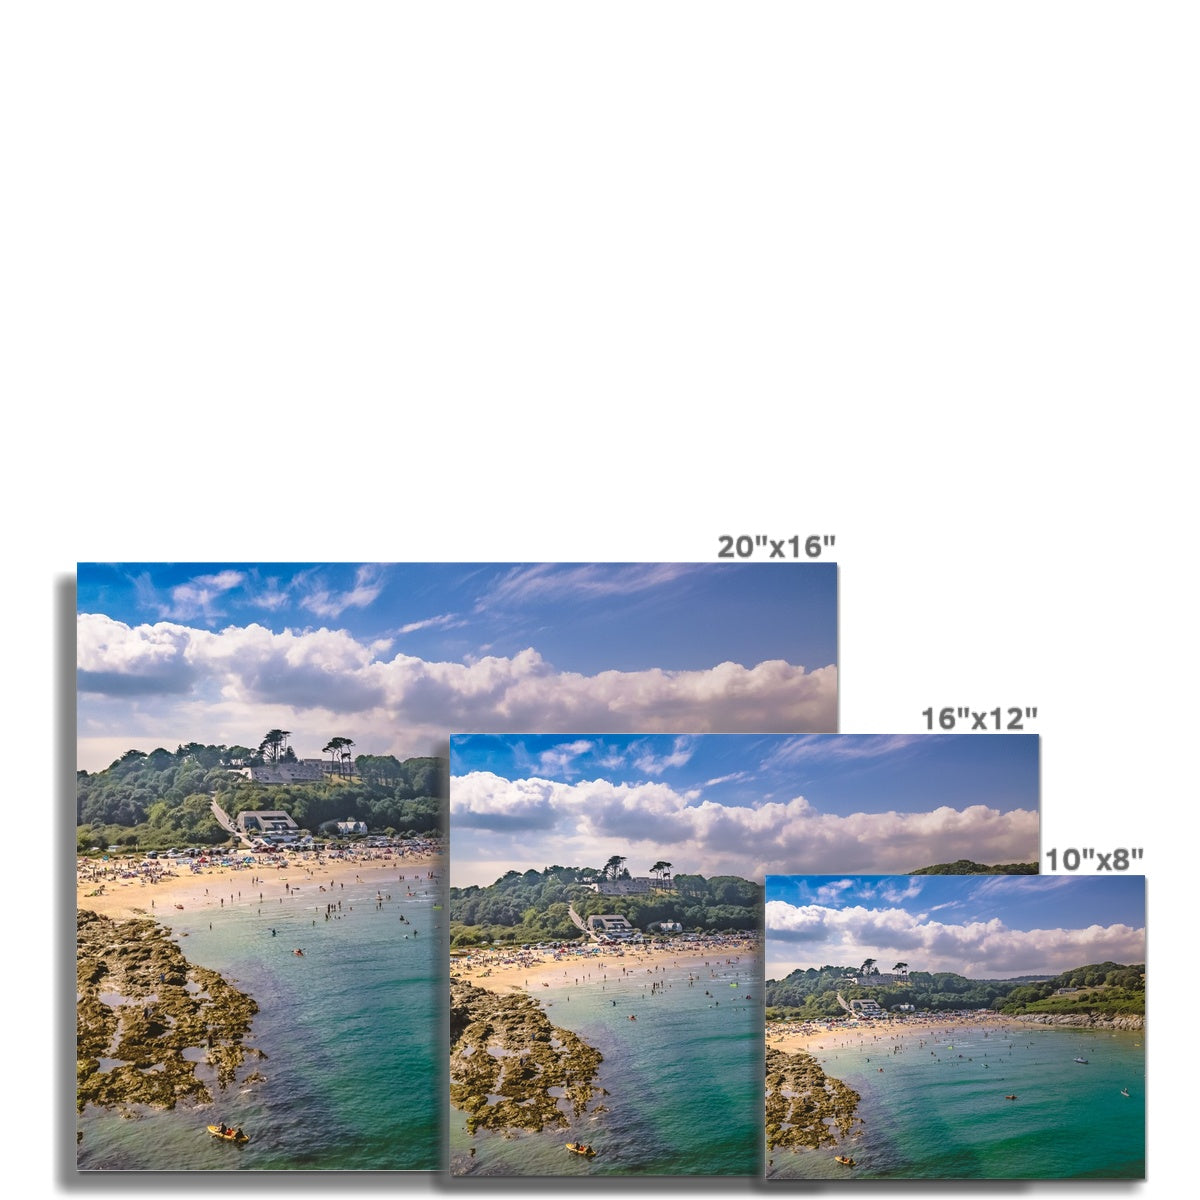 maenporth beach picture sizes